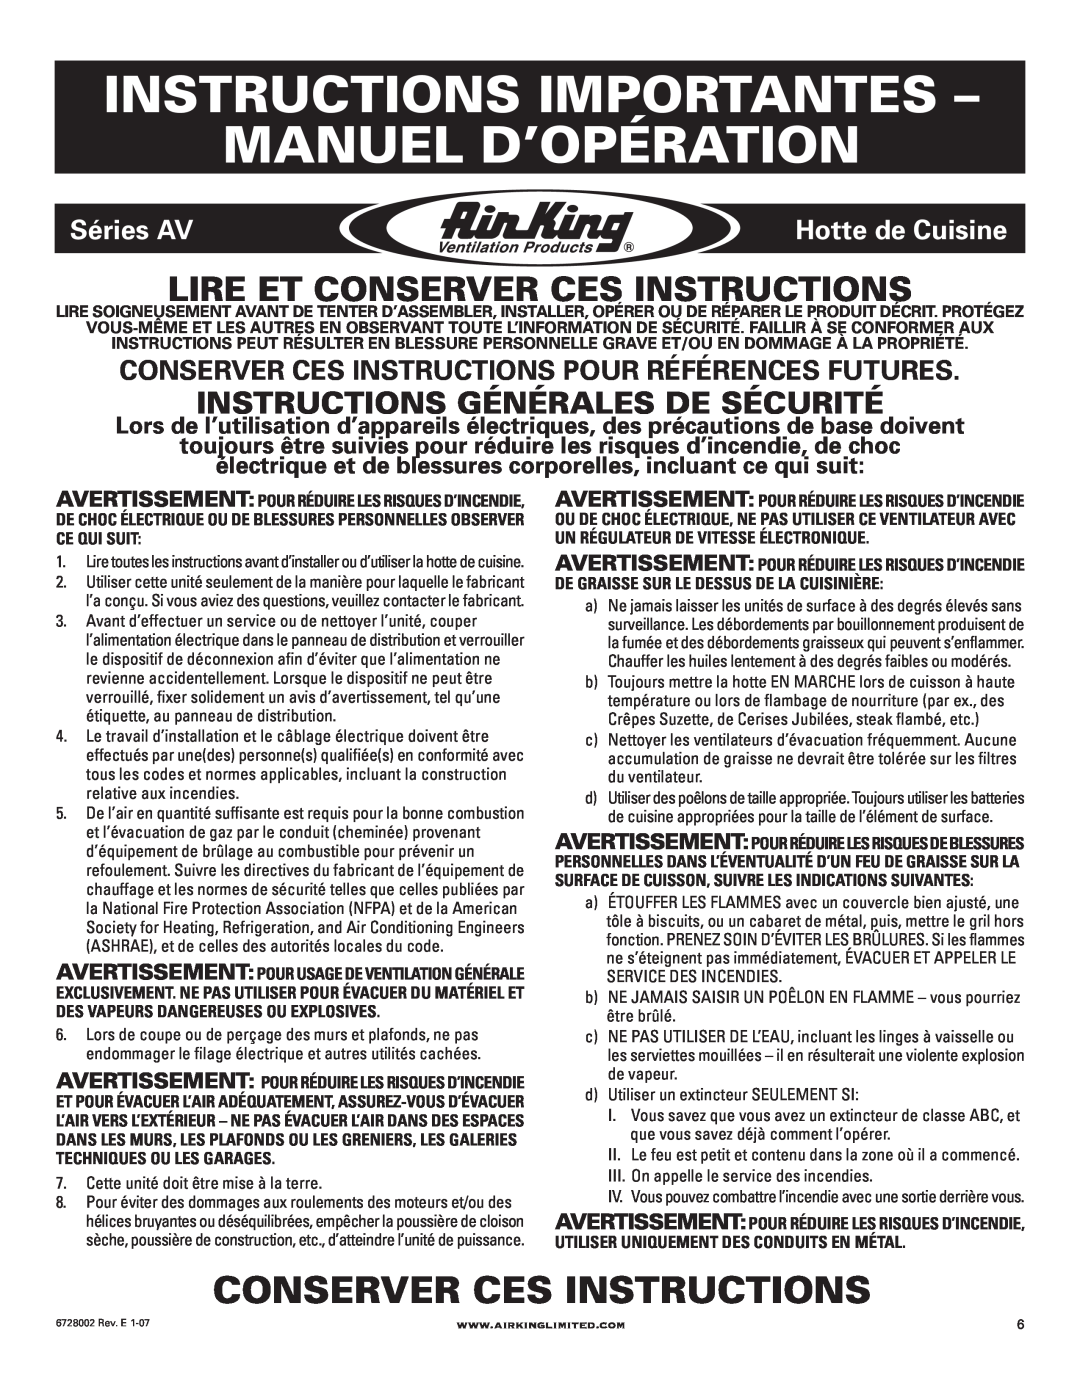 Air King Ventilation Hood manual Instructions Importantes Manuel D’Opération, Conserver Ces Instructions, Séries AV 